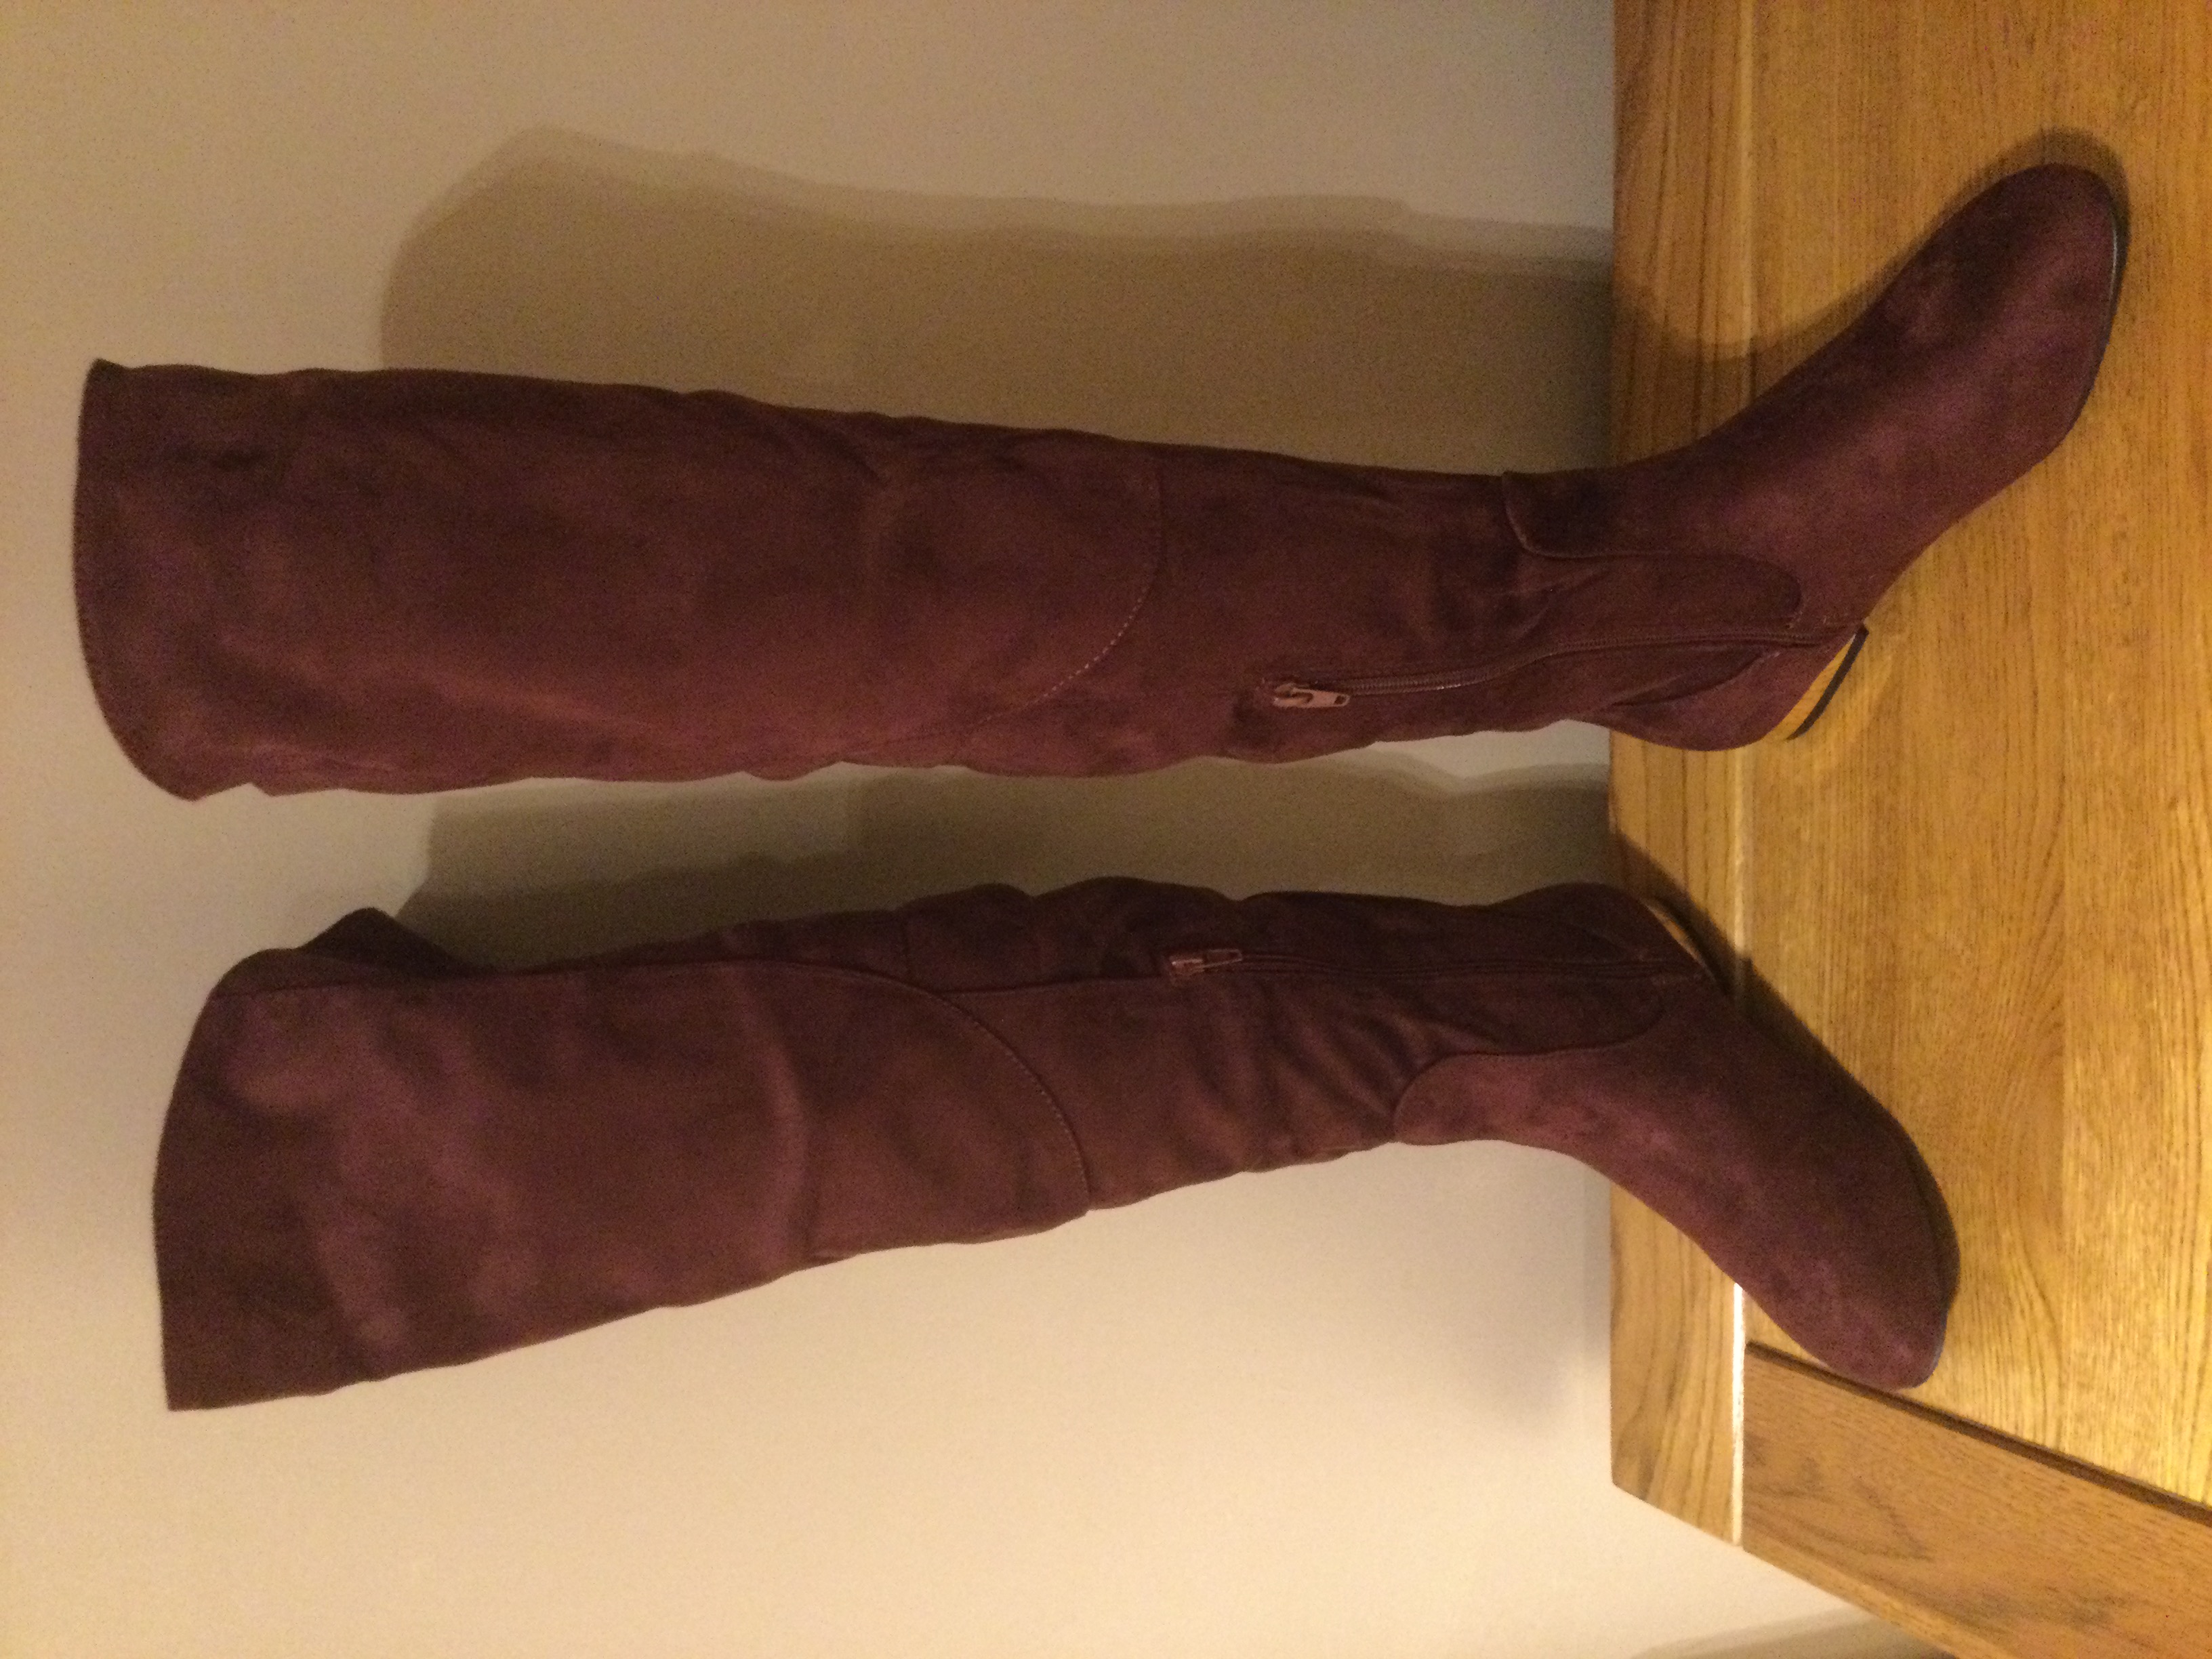 Dolcis “Katie” Long Boots, Low Block Heel, Size 5, Burgundy- New RRP £55.00